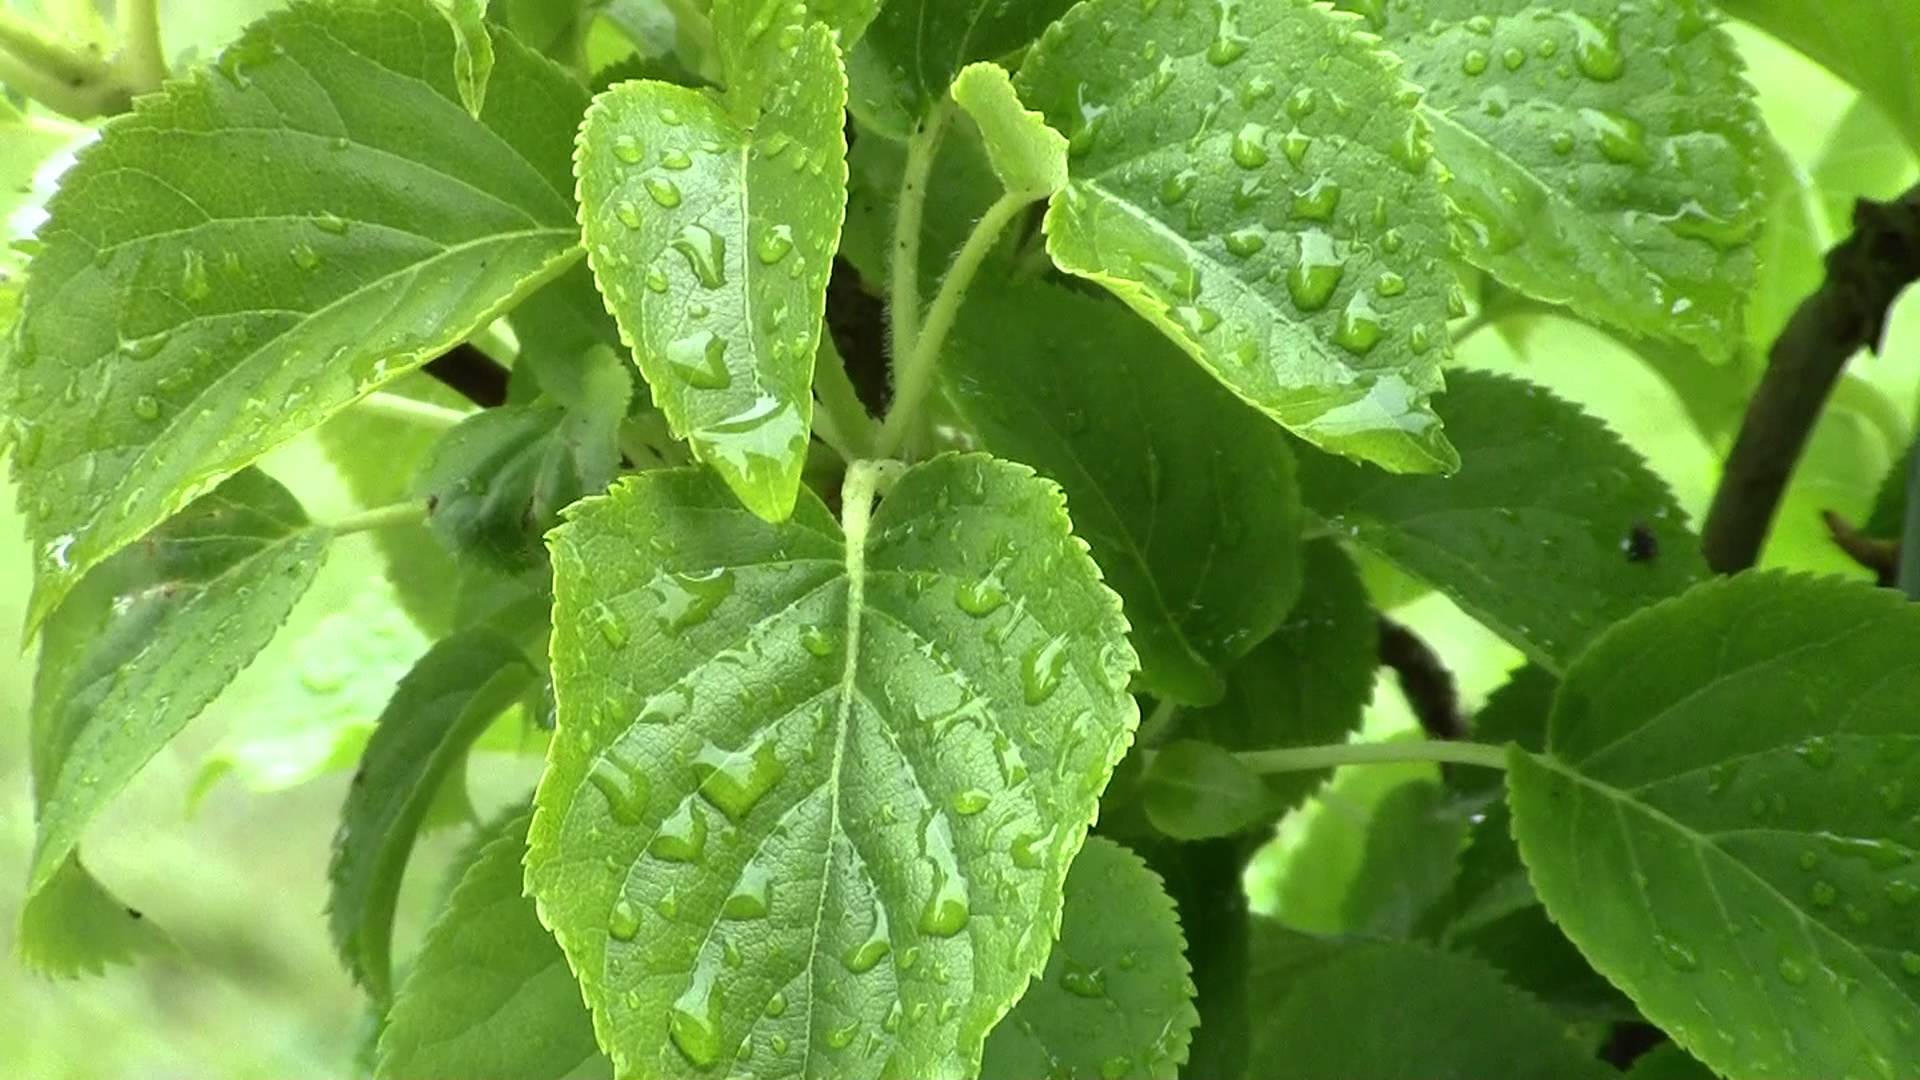 raindrops on leaves - YouTube